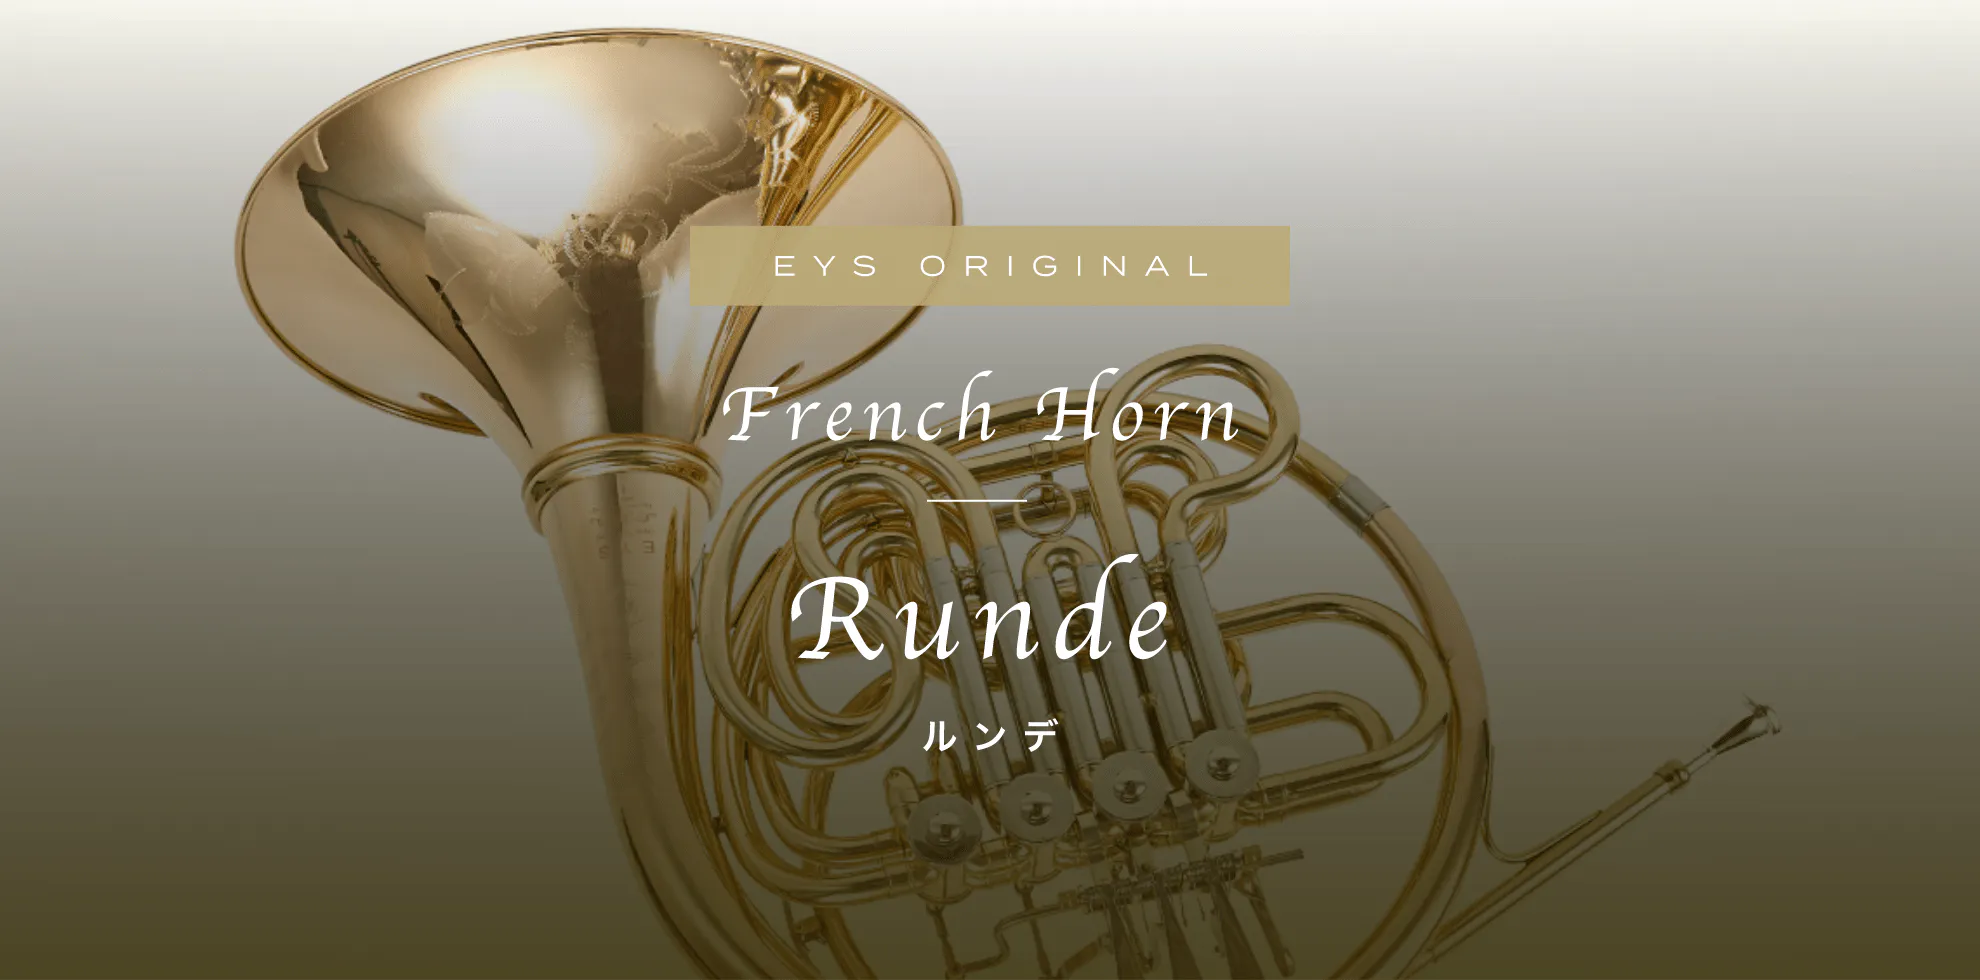 EYS ORIGINAL French Horn Runde ルンデ